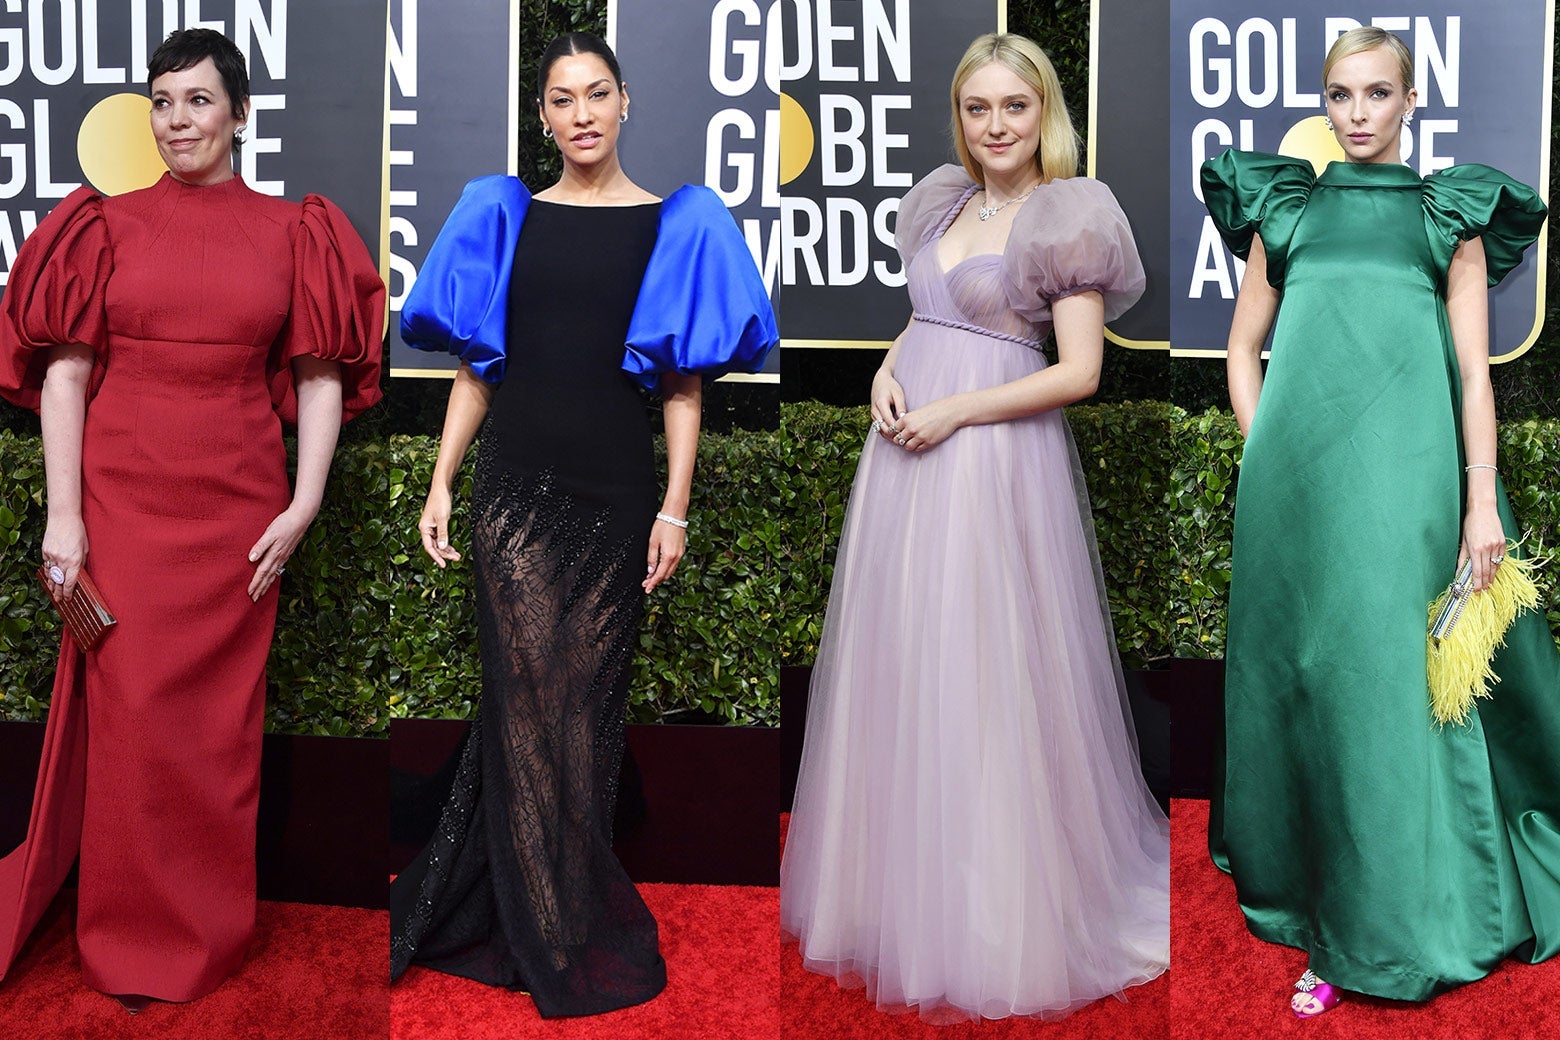 Olivia Colman, Janina Gavankar, Dakota Fanning, and Jodie Comer at the 2020 Golden Globes red carpet.